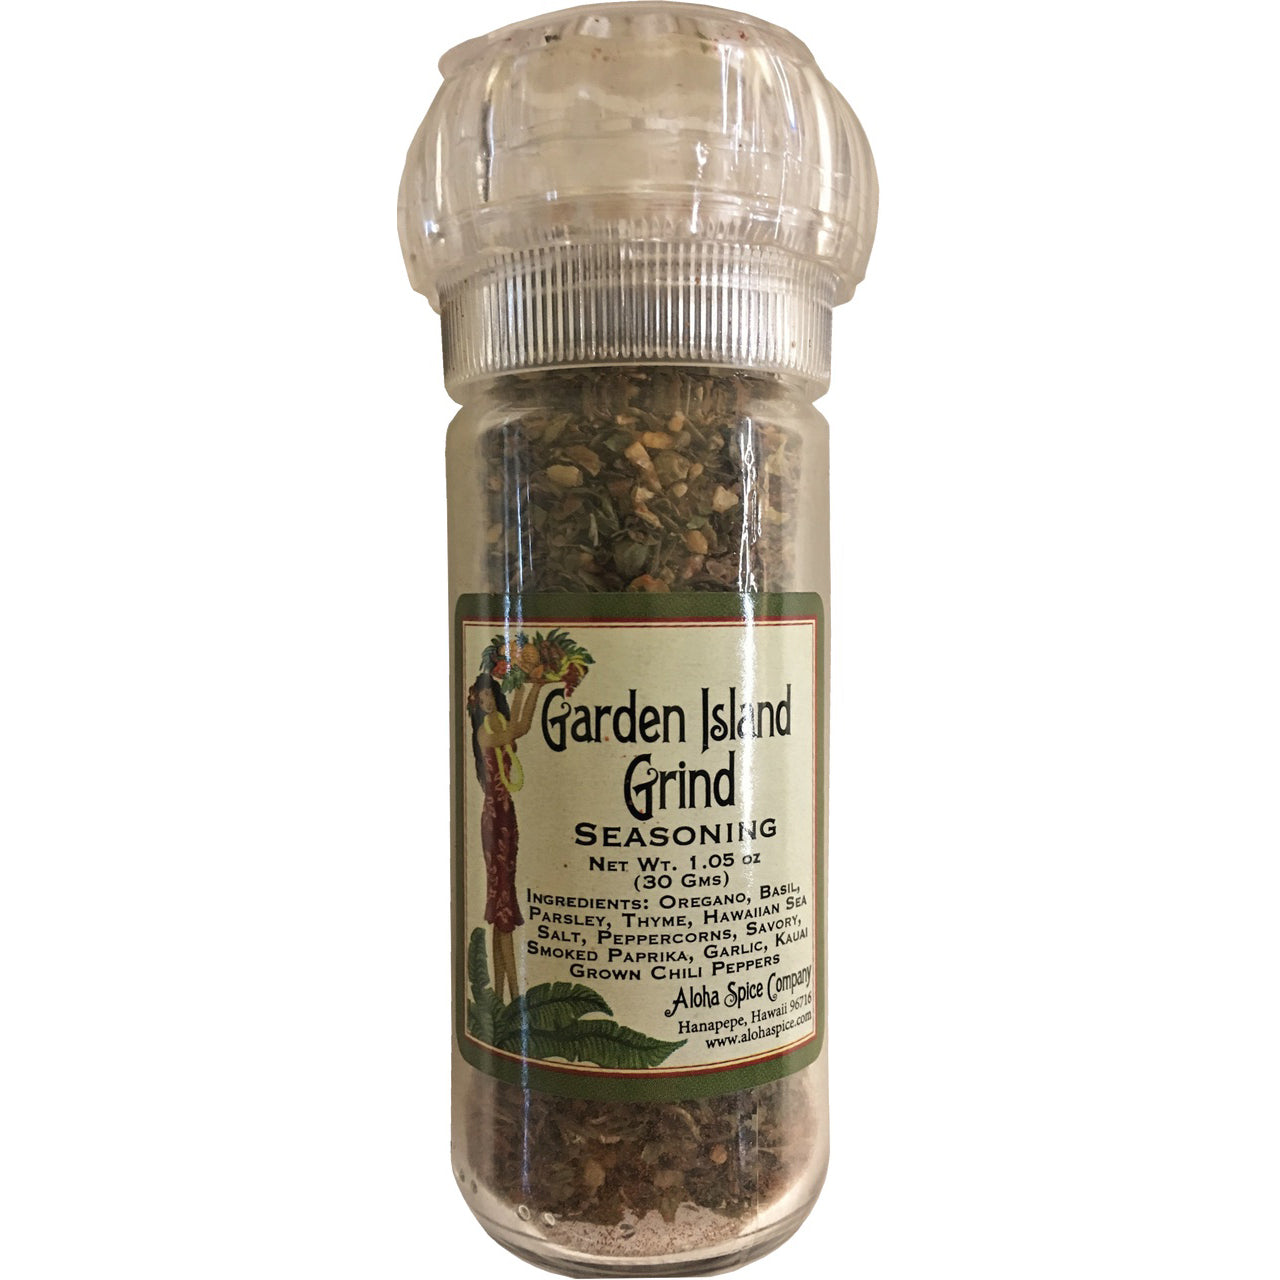 Garden Island Grind Seasoning 1.05 oz. Refillable Grinder